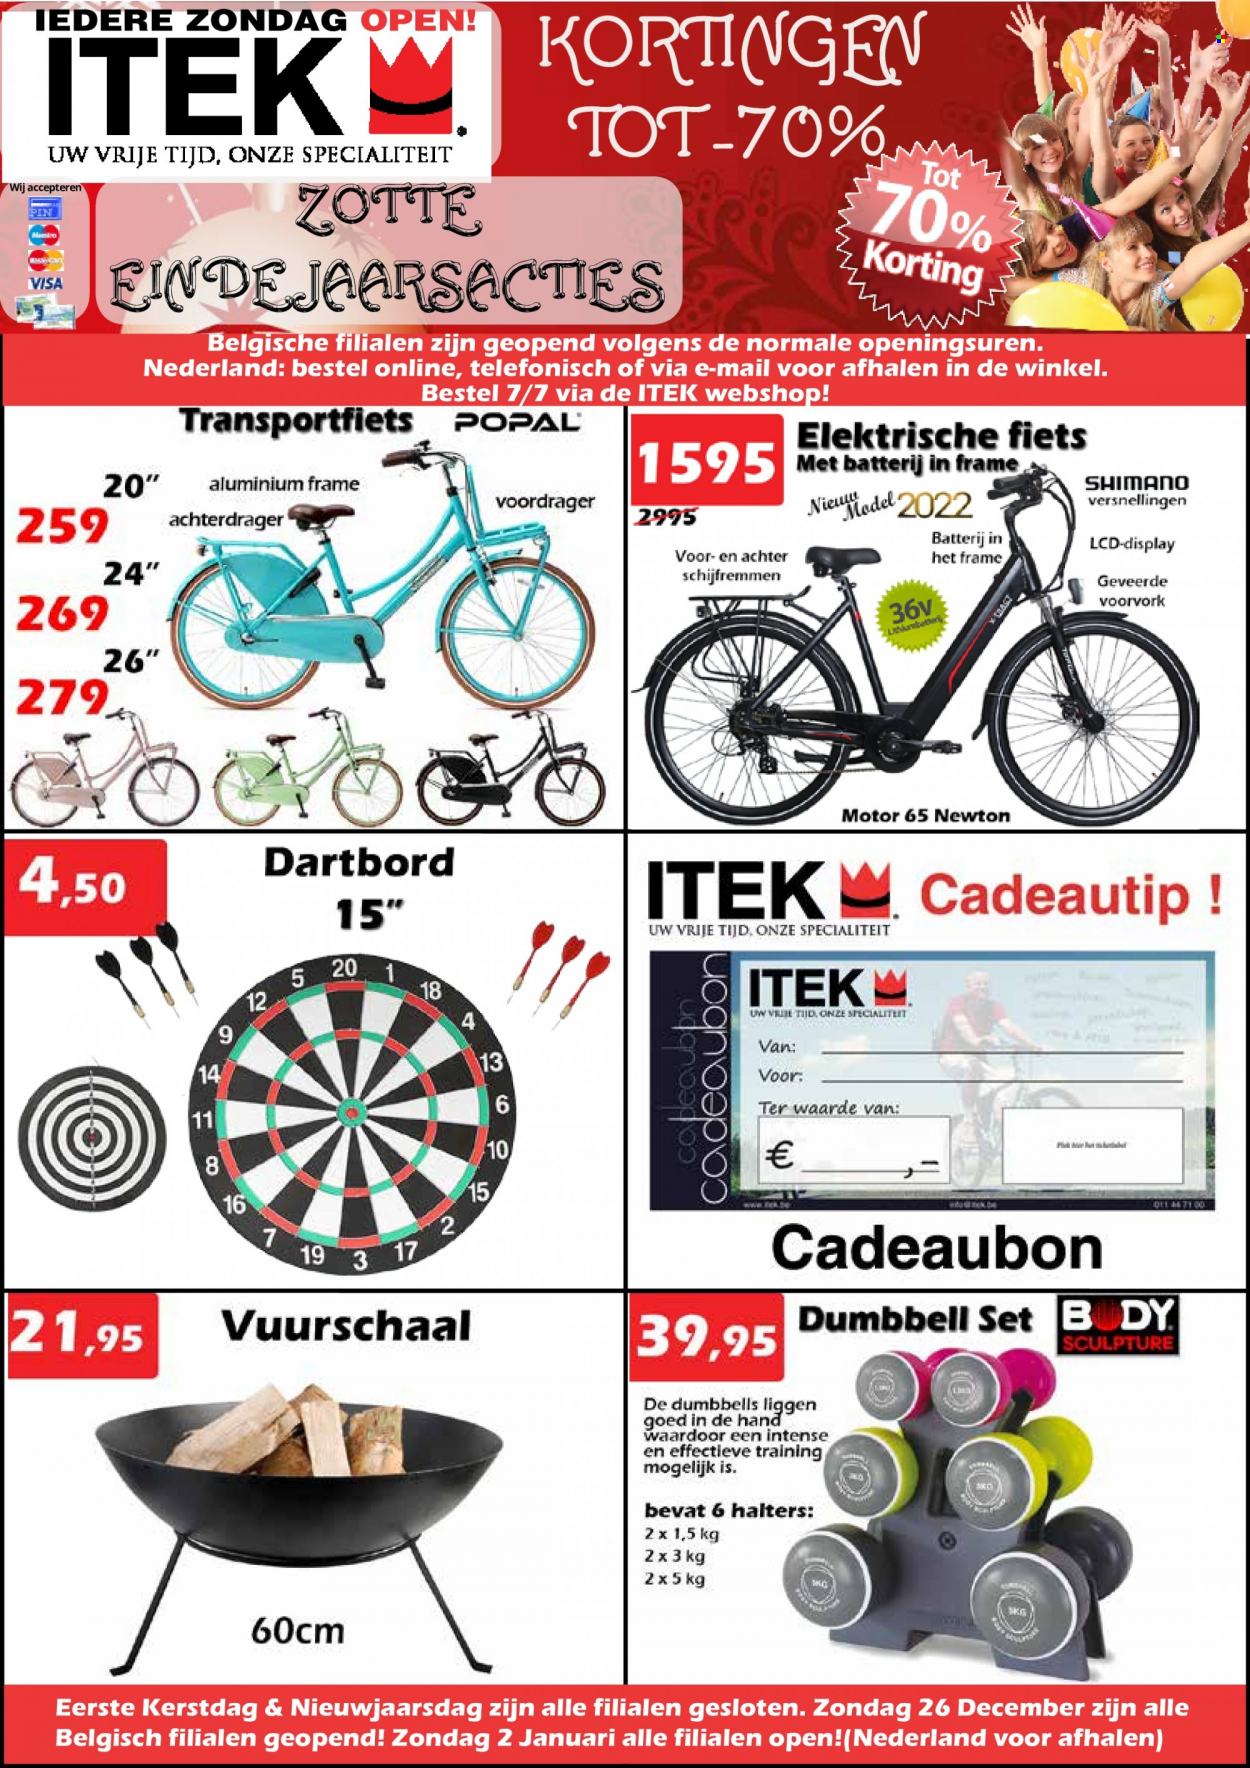 Itek-aanbieding - 23.12.2021 - 16.1.2022 -  producten in de aanbieding - elektrische fiets, popal, shimano, fiets. Pagina 1.